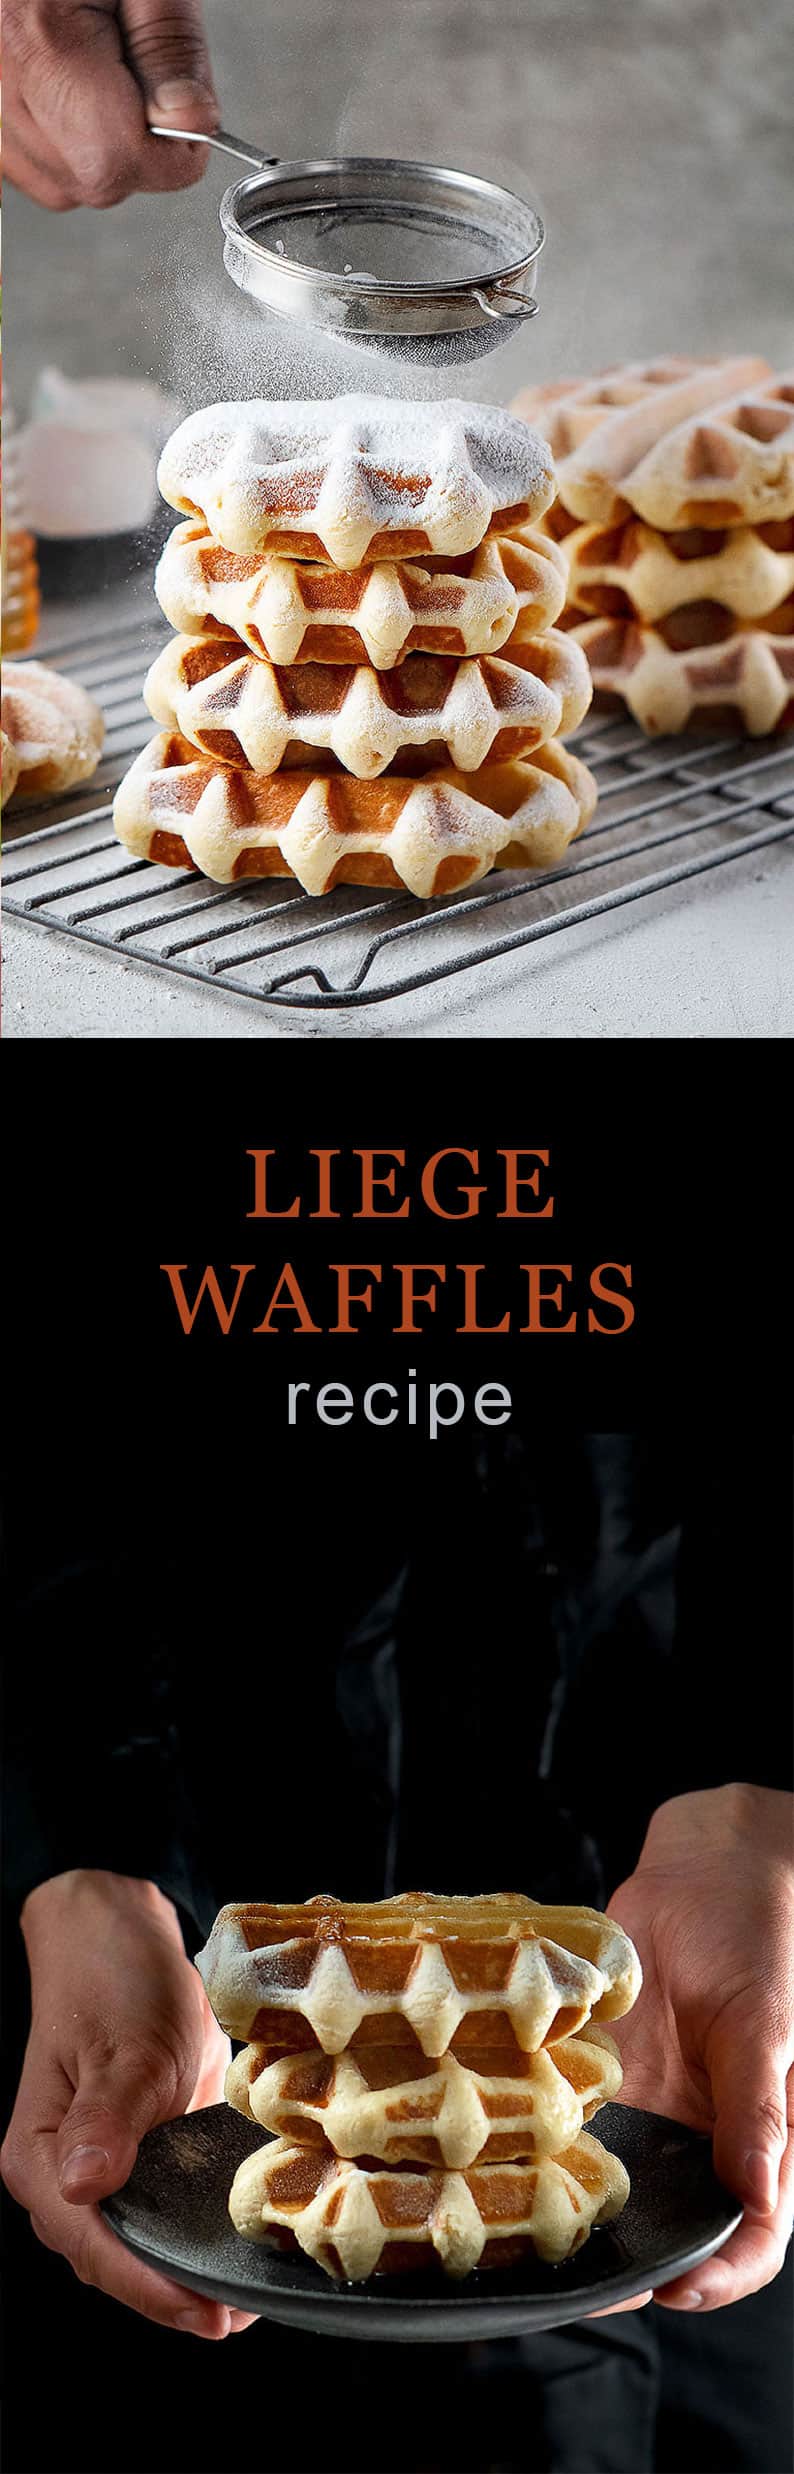 belgian-liege-waffles